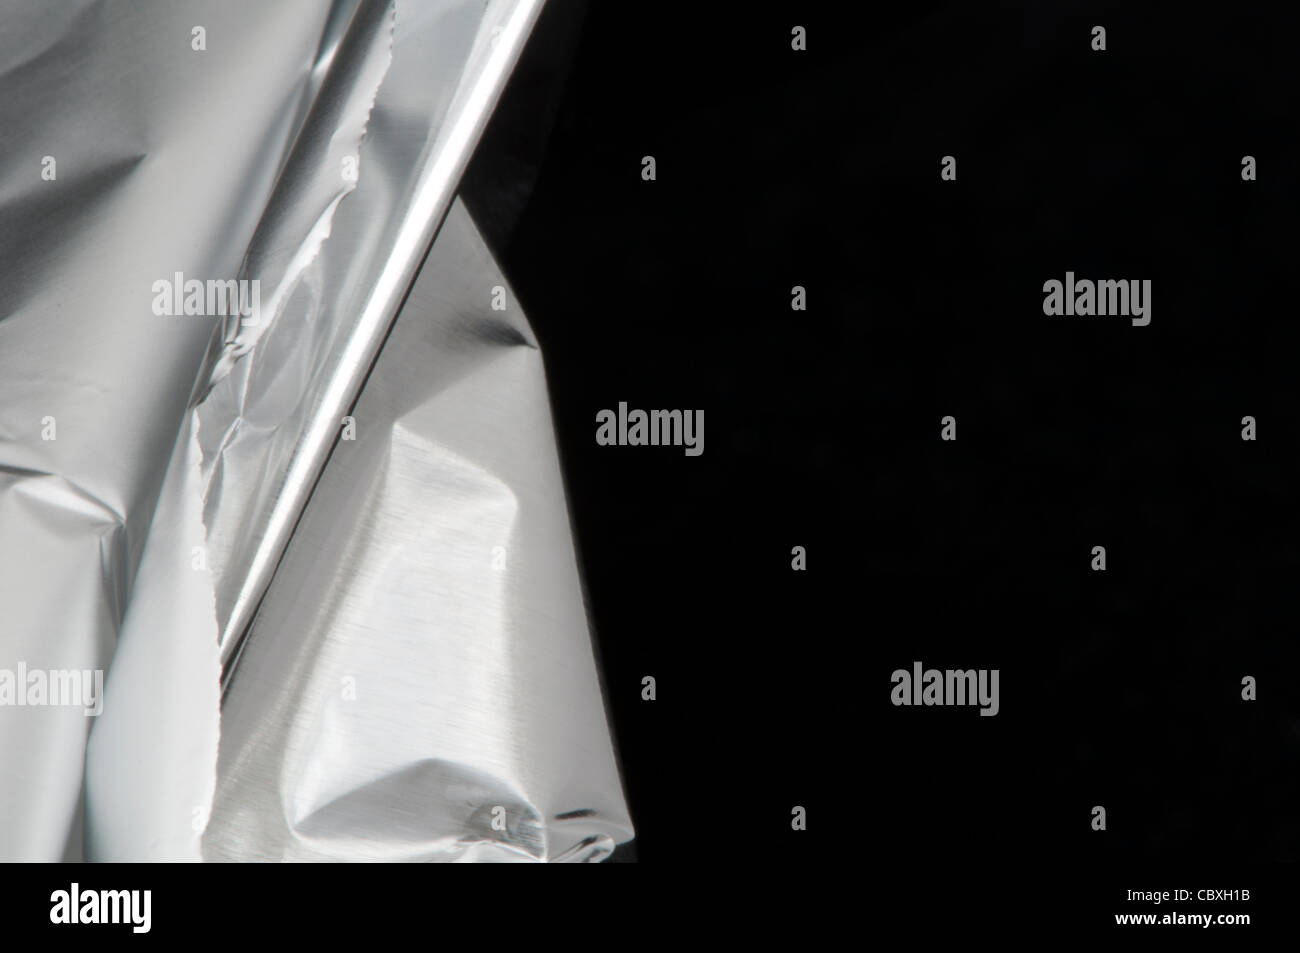 Cook Aluminum Foil on black background Stock Photo